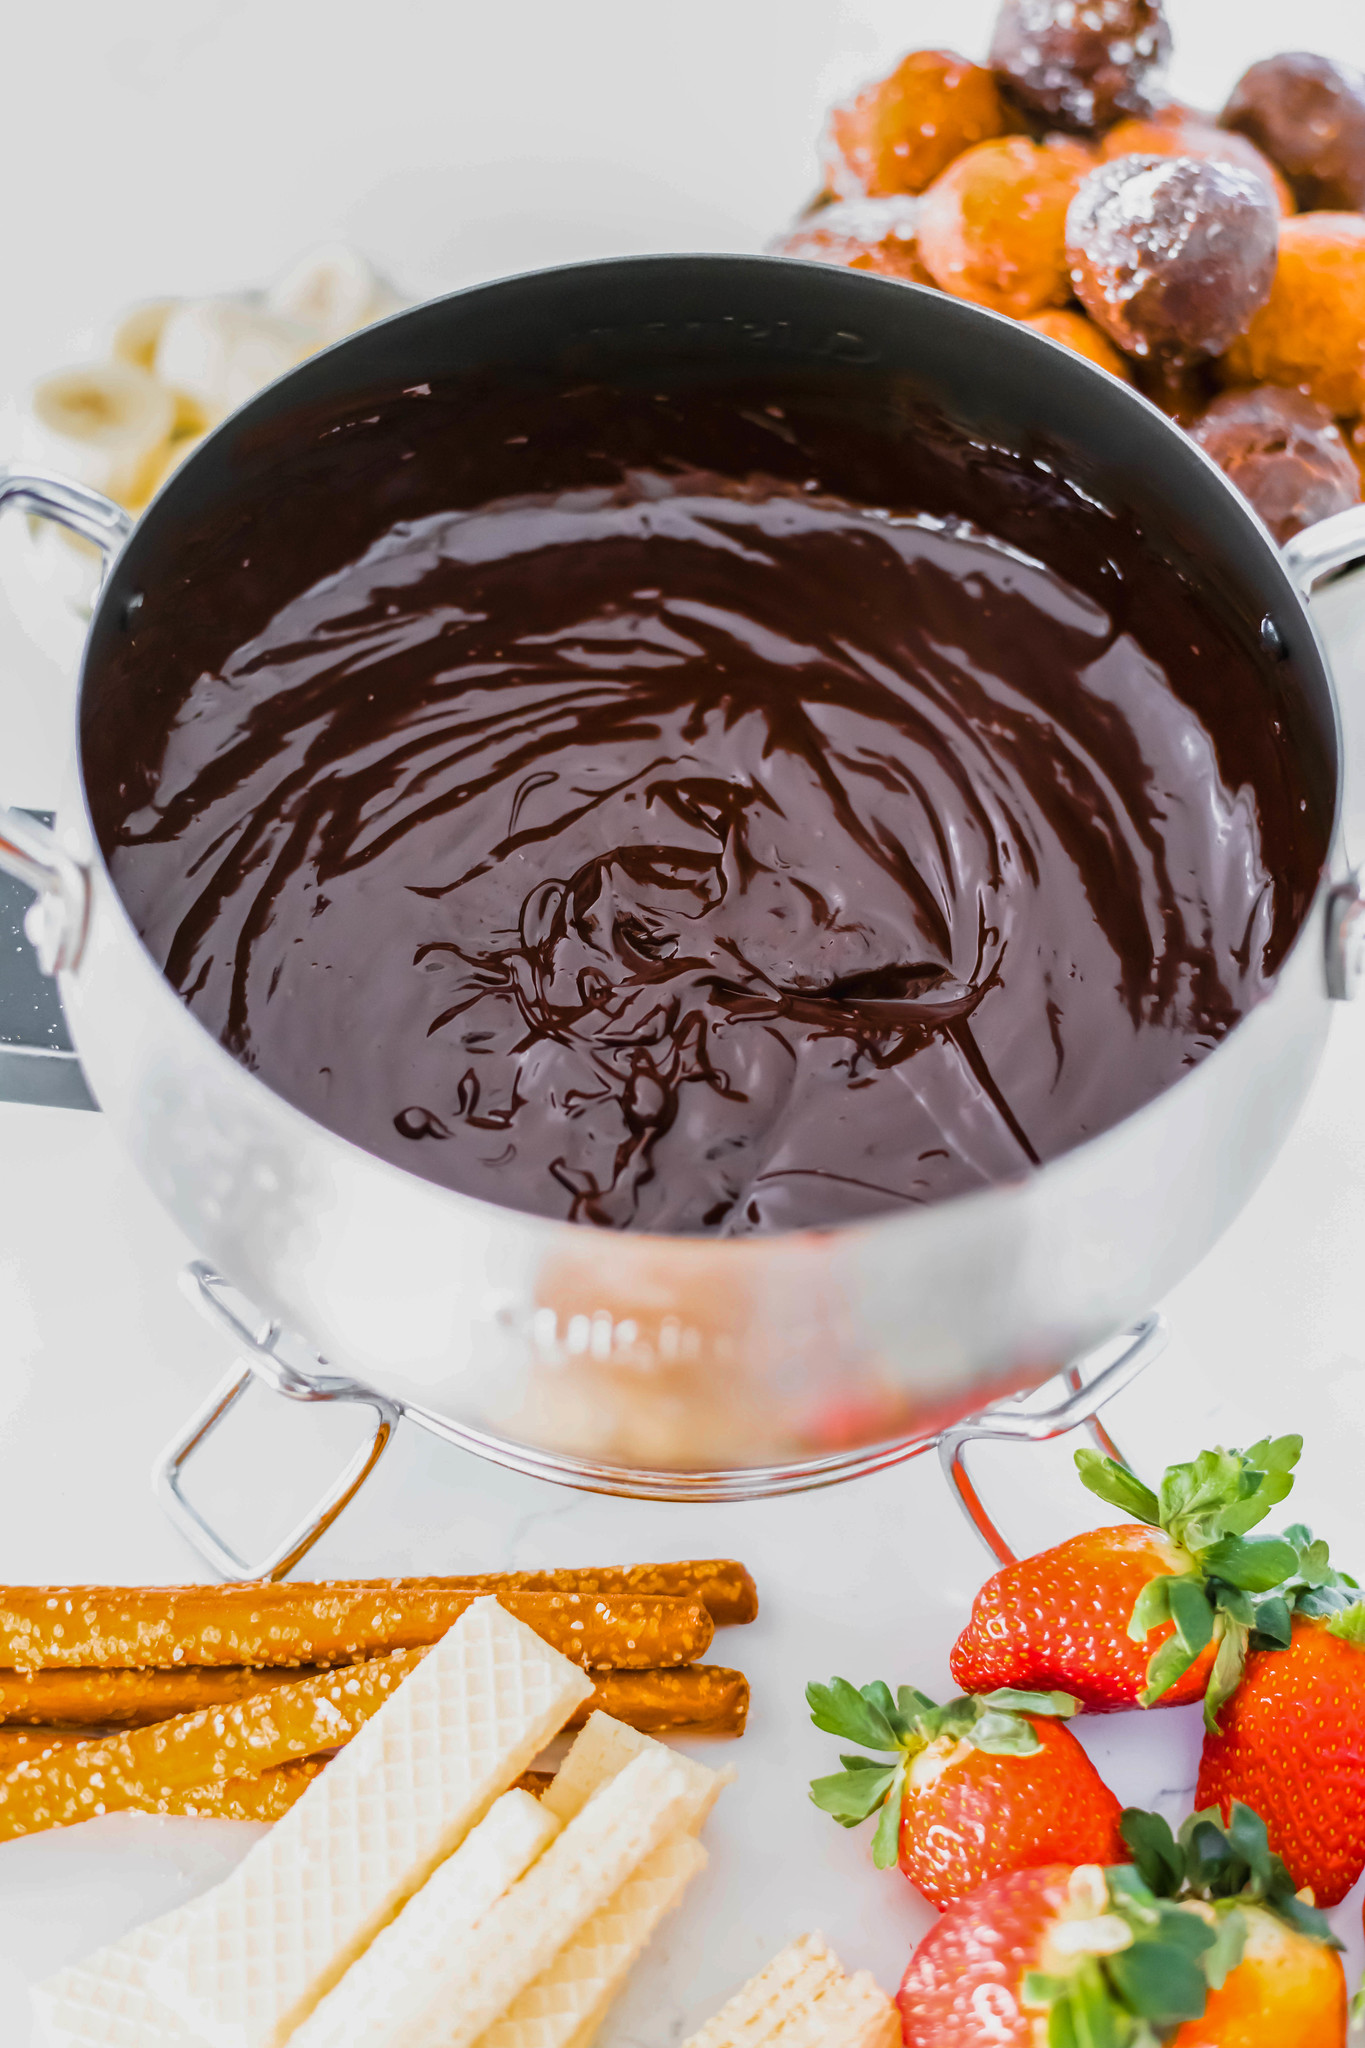 Serve Chocolate Orange Fondue, a fun twist on the classic chocolate fondue, for Valentine's Day dessert. Prepared in minutes with the perfect chocolate orange flavor combo.